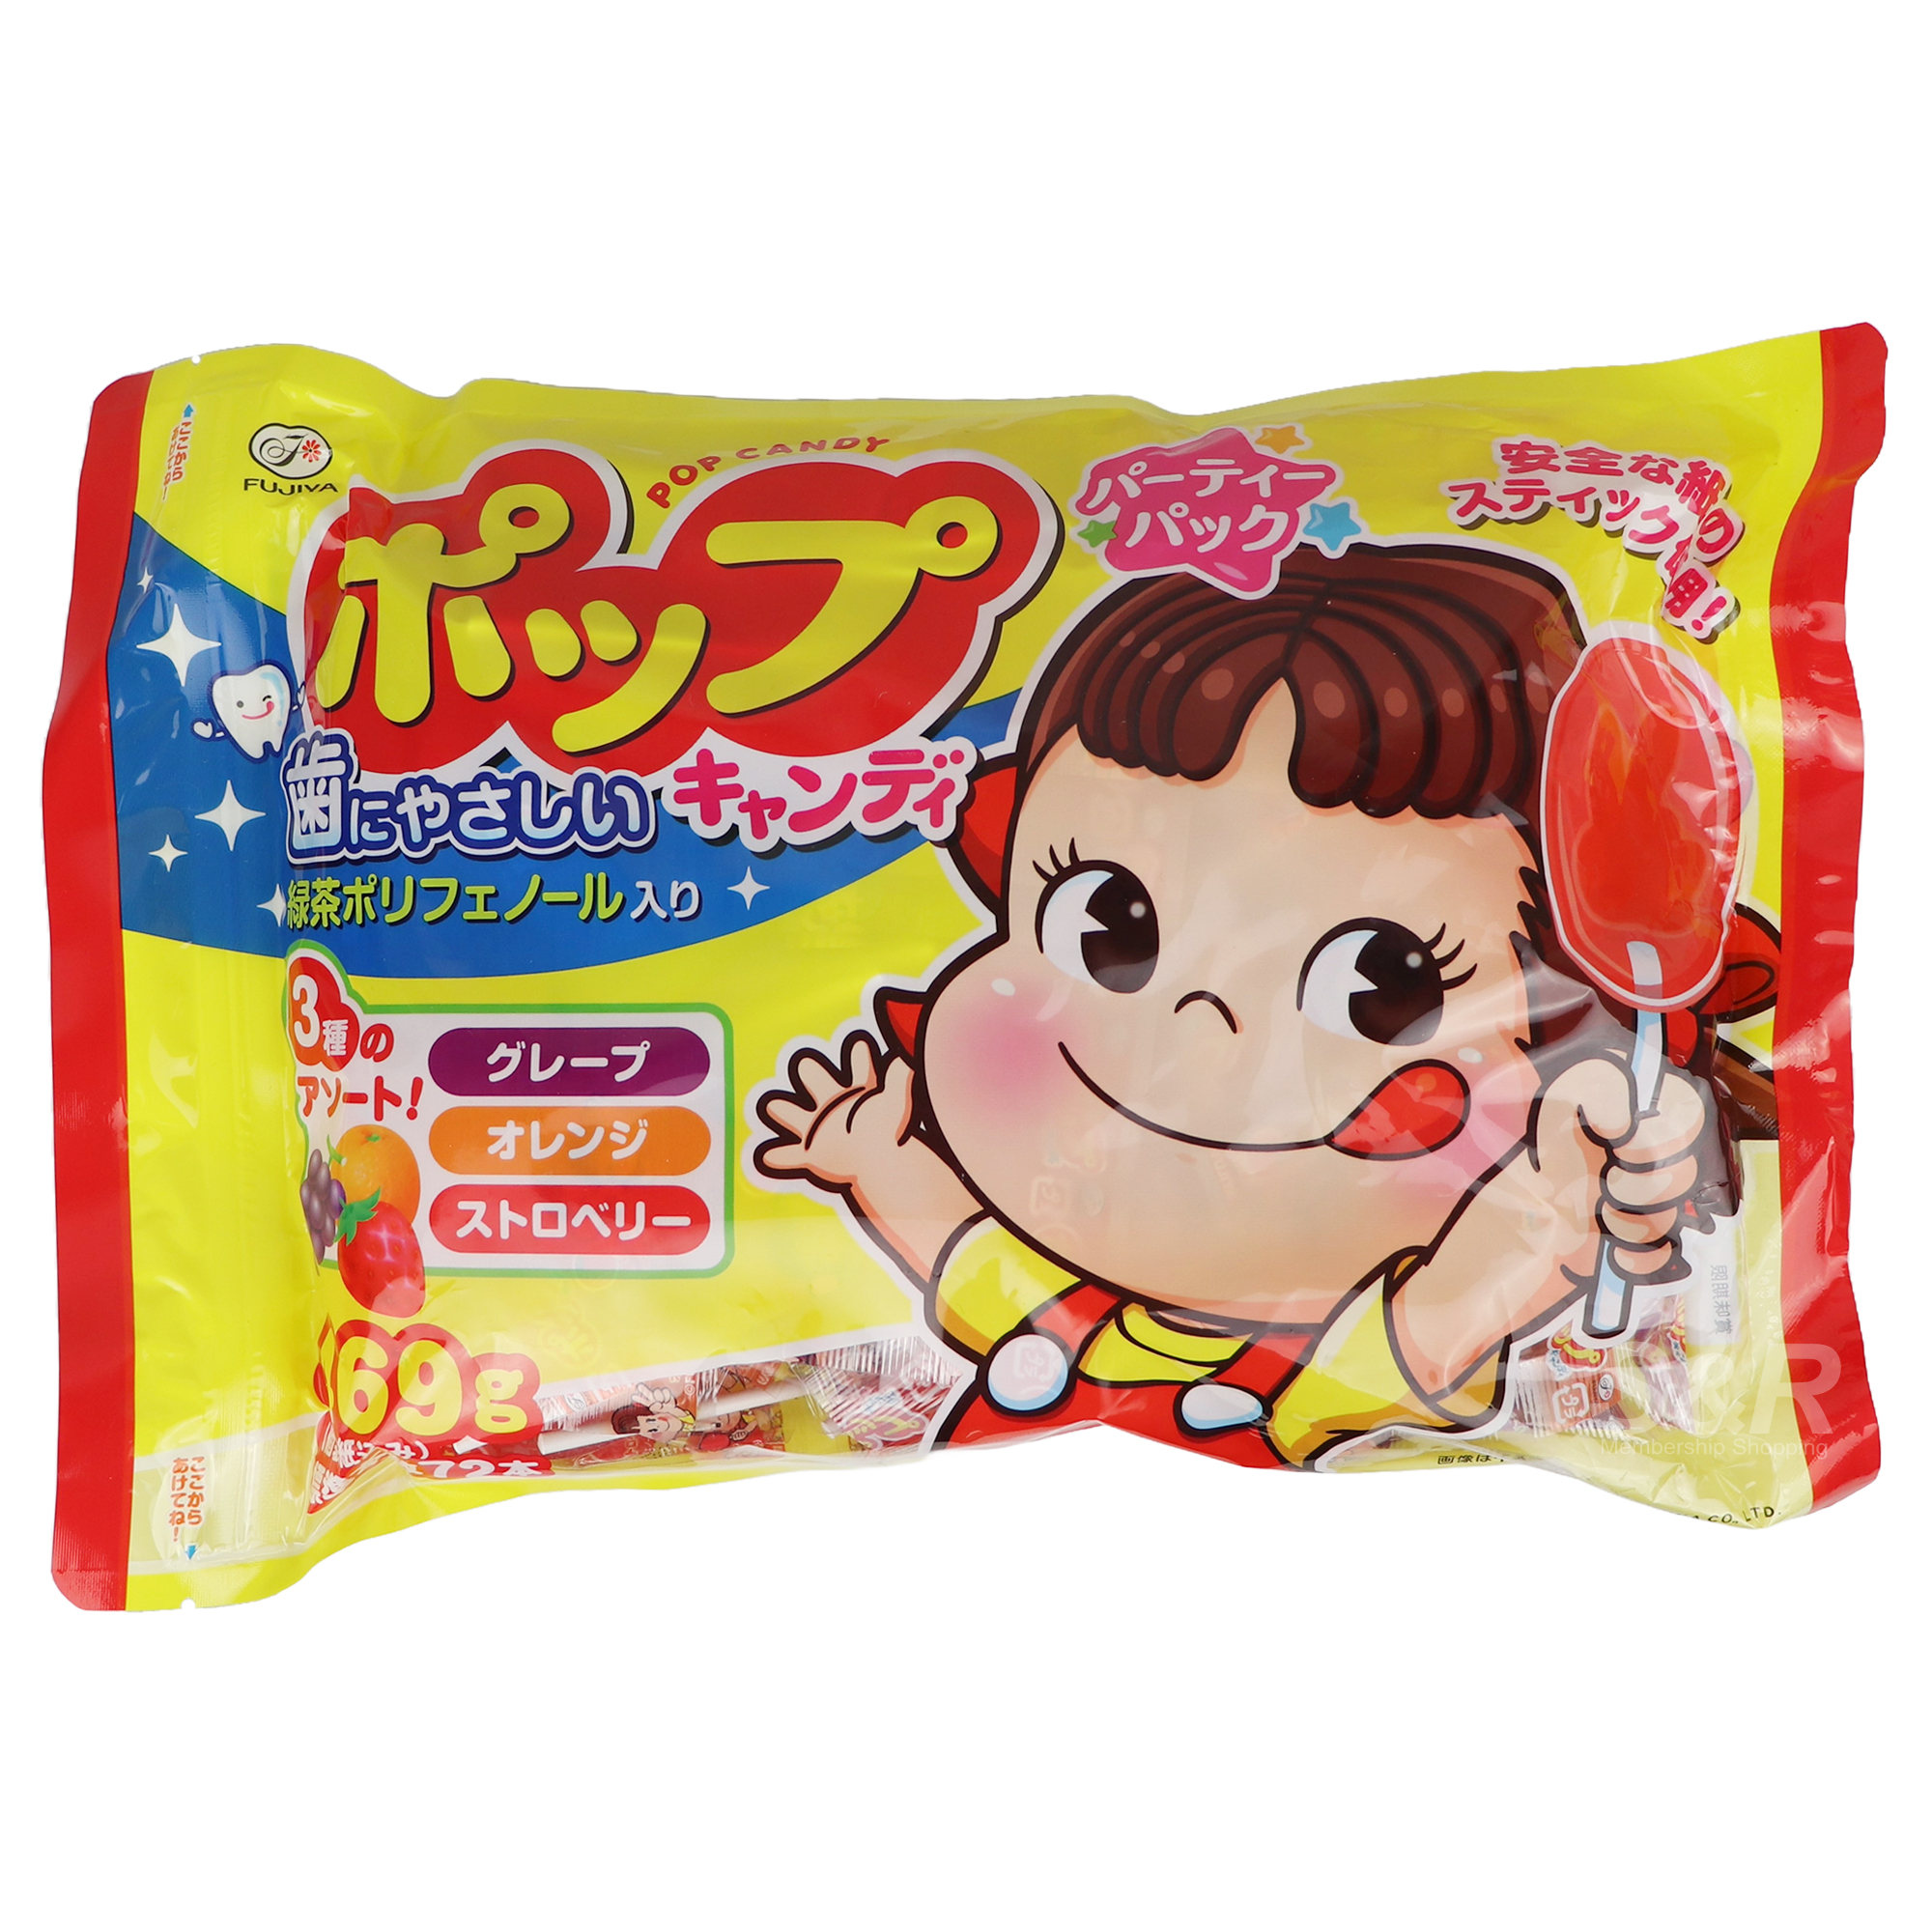 Fujiya Pop Candy Party Pack 469g